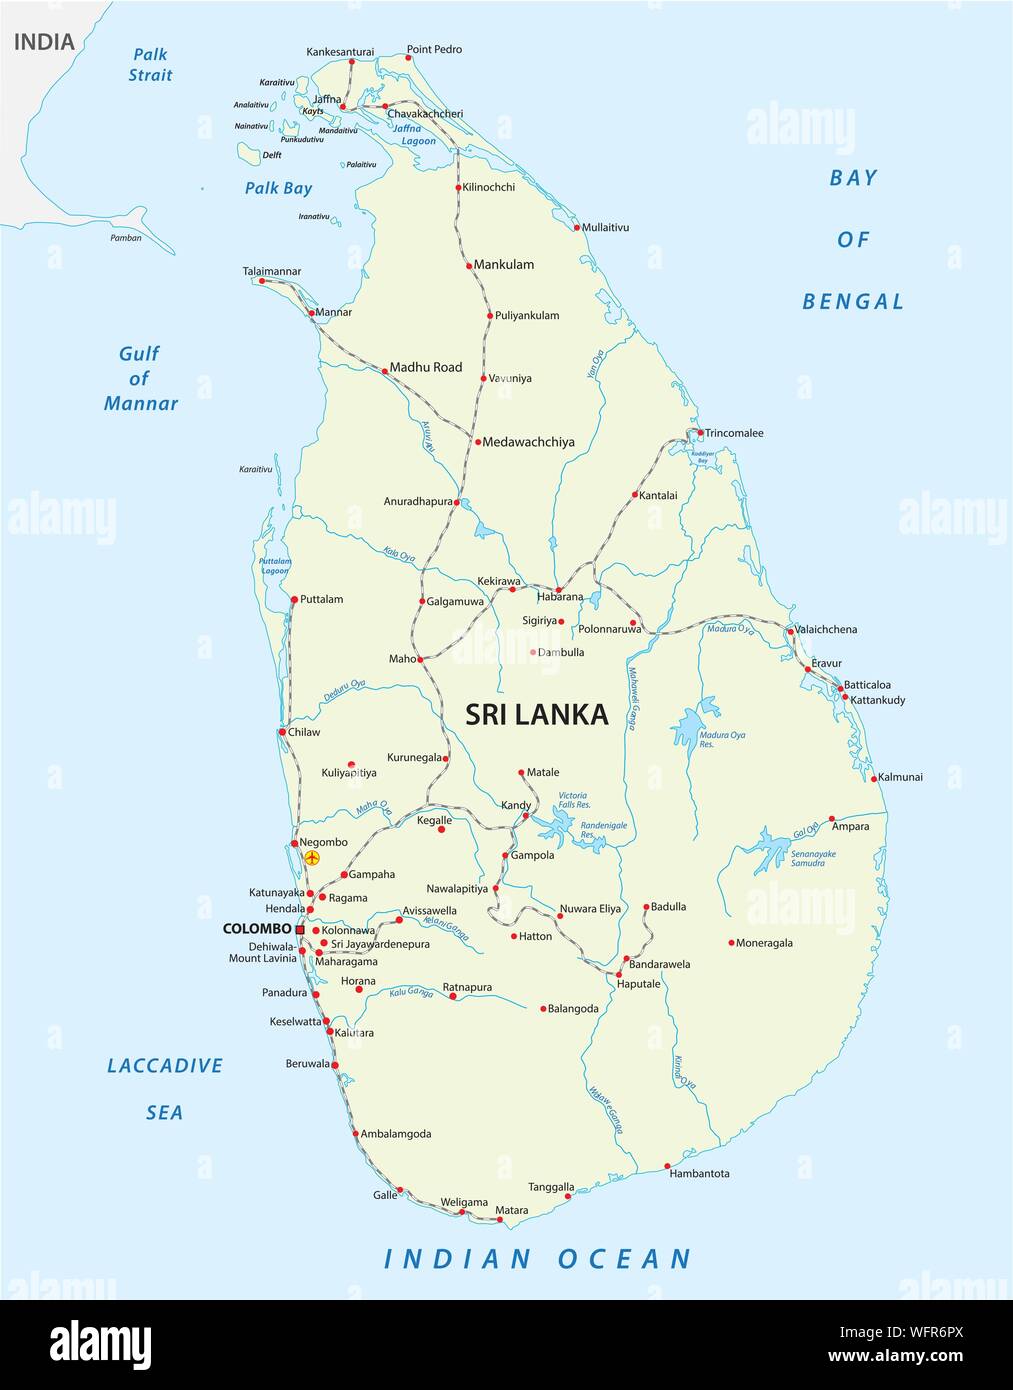 Democratic Socialist Republic of Sri Lanka Railway map Stock Vector